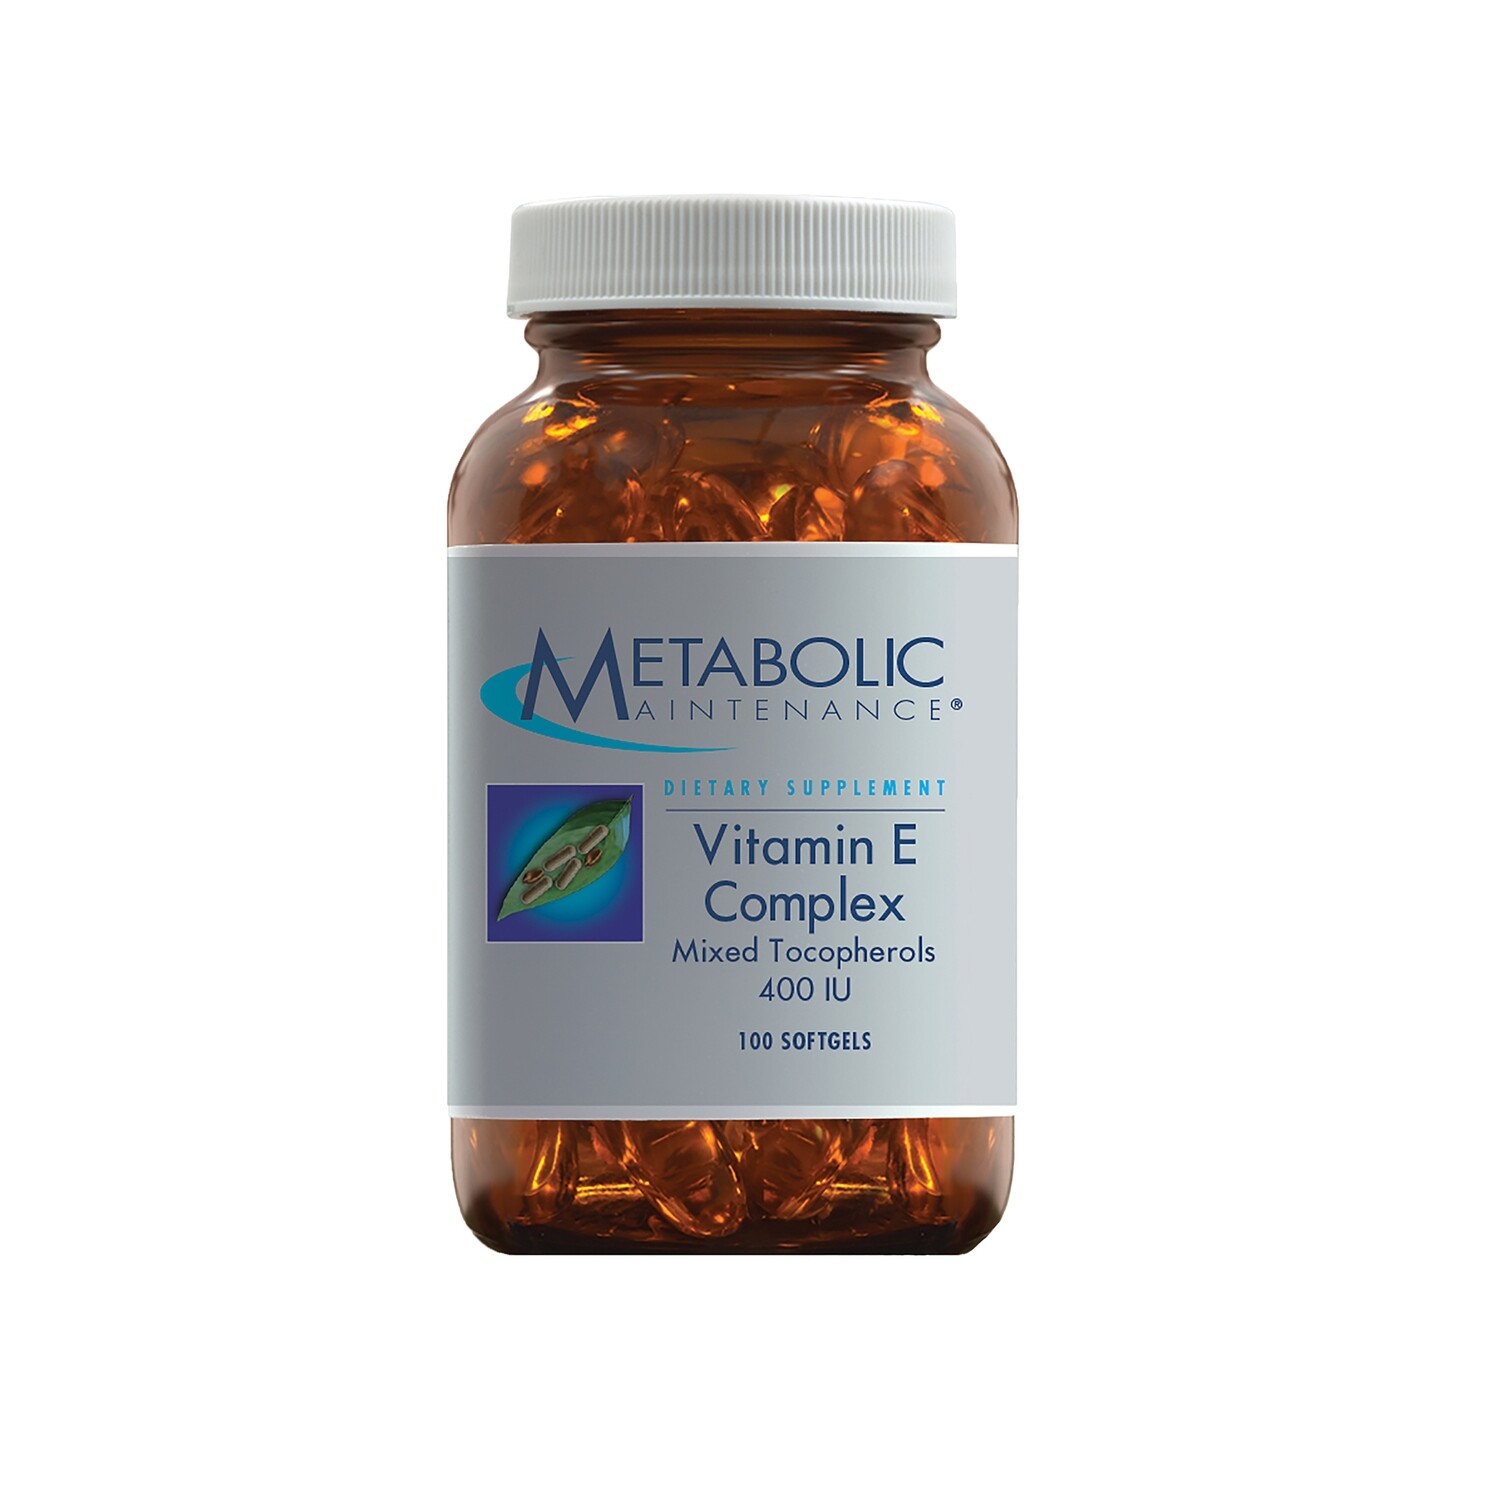 Vitamin E Complex by Metabolic Maintenance